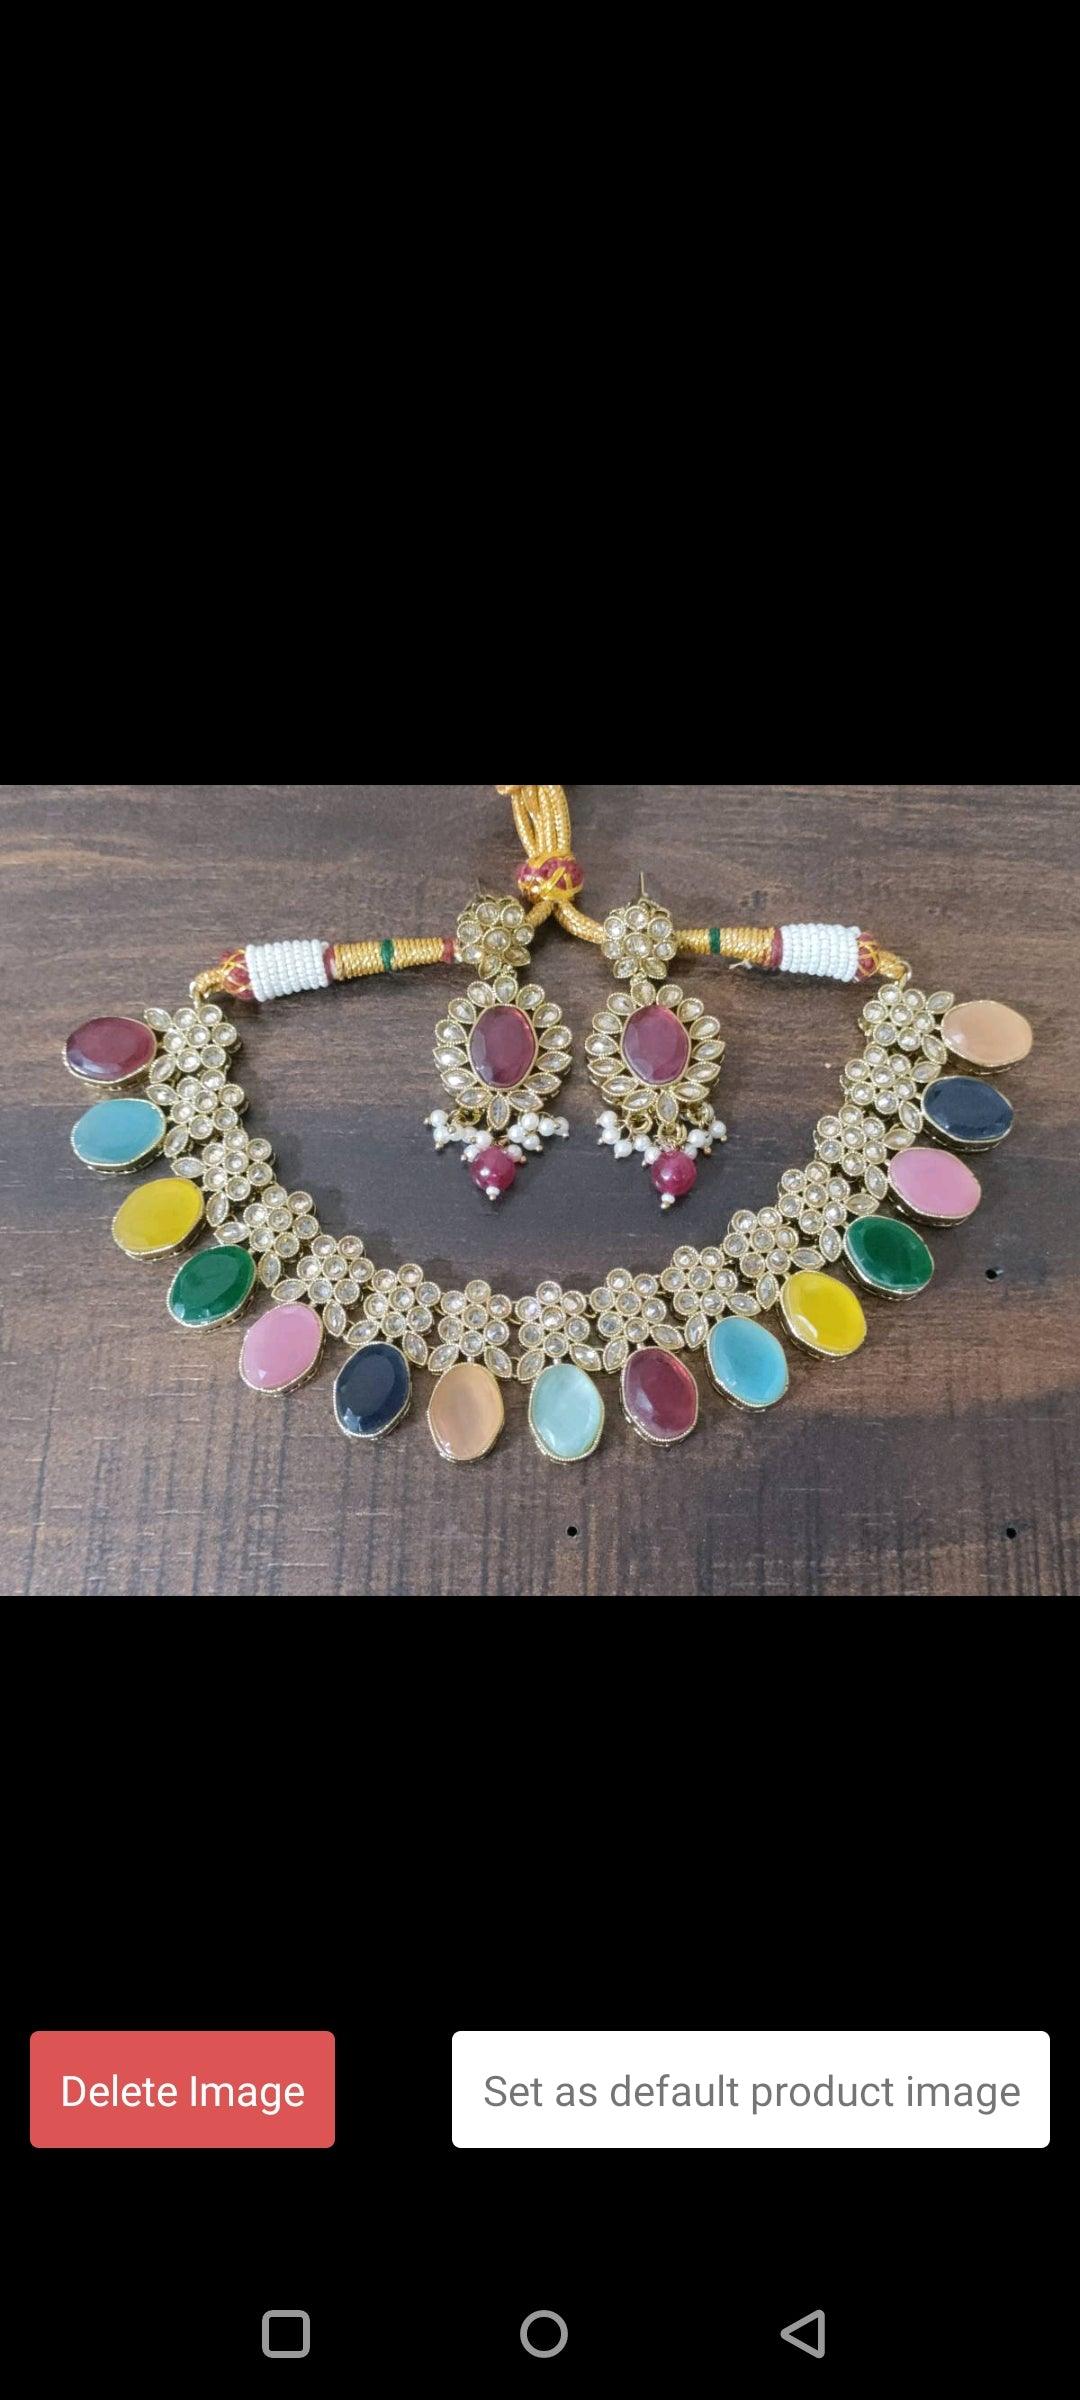 Monalisa necklace mehendi -5785 B2 - rchiecreation